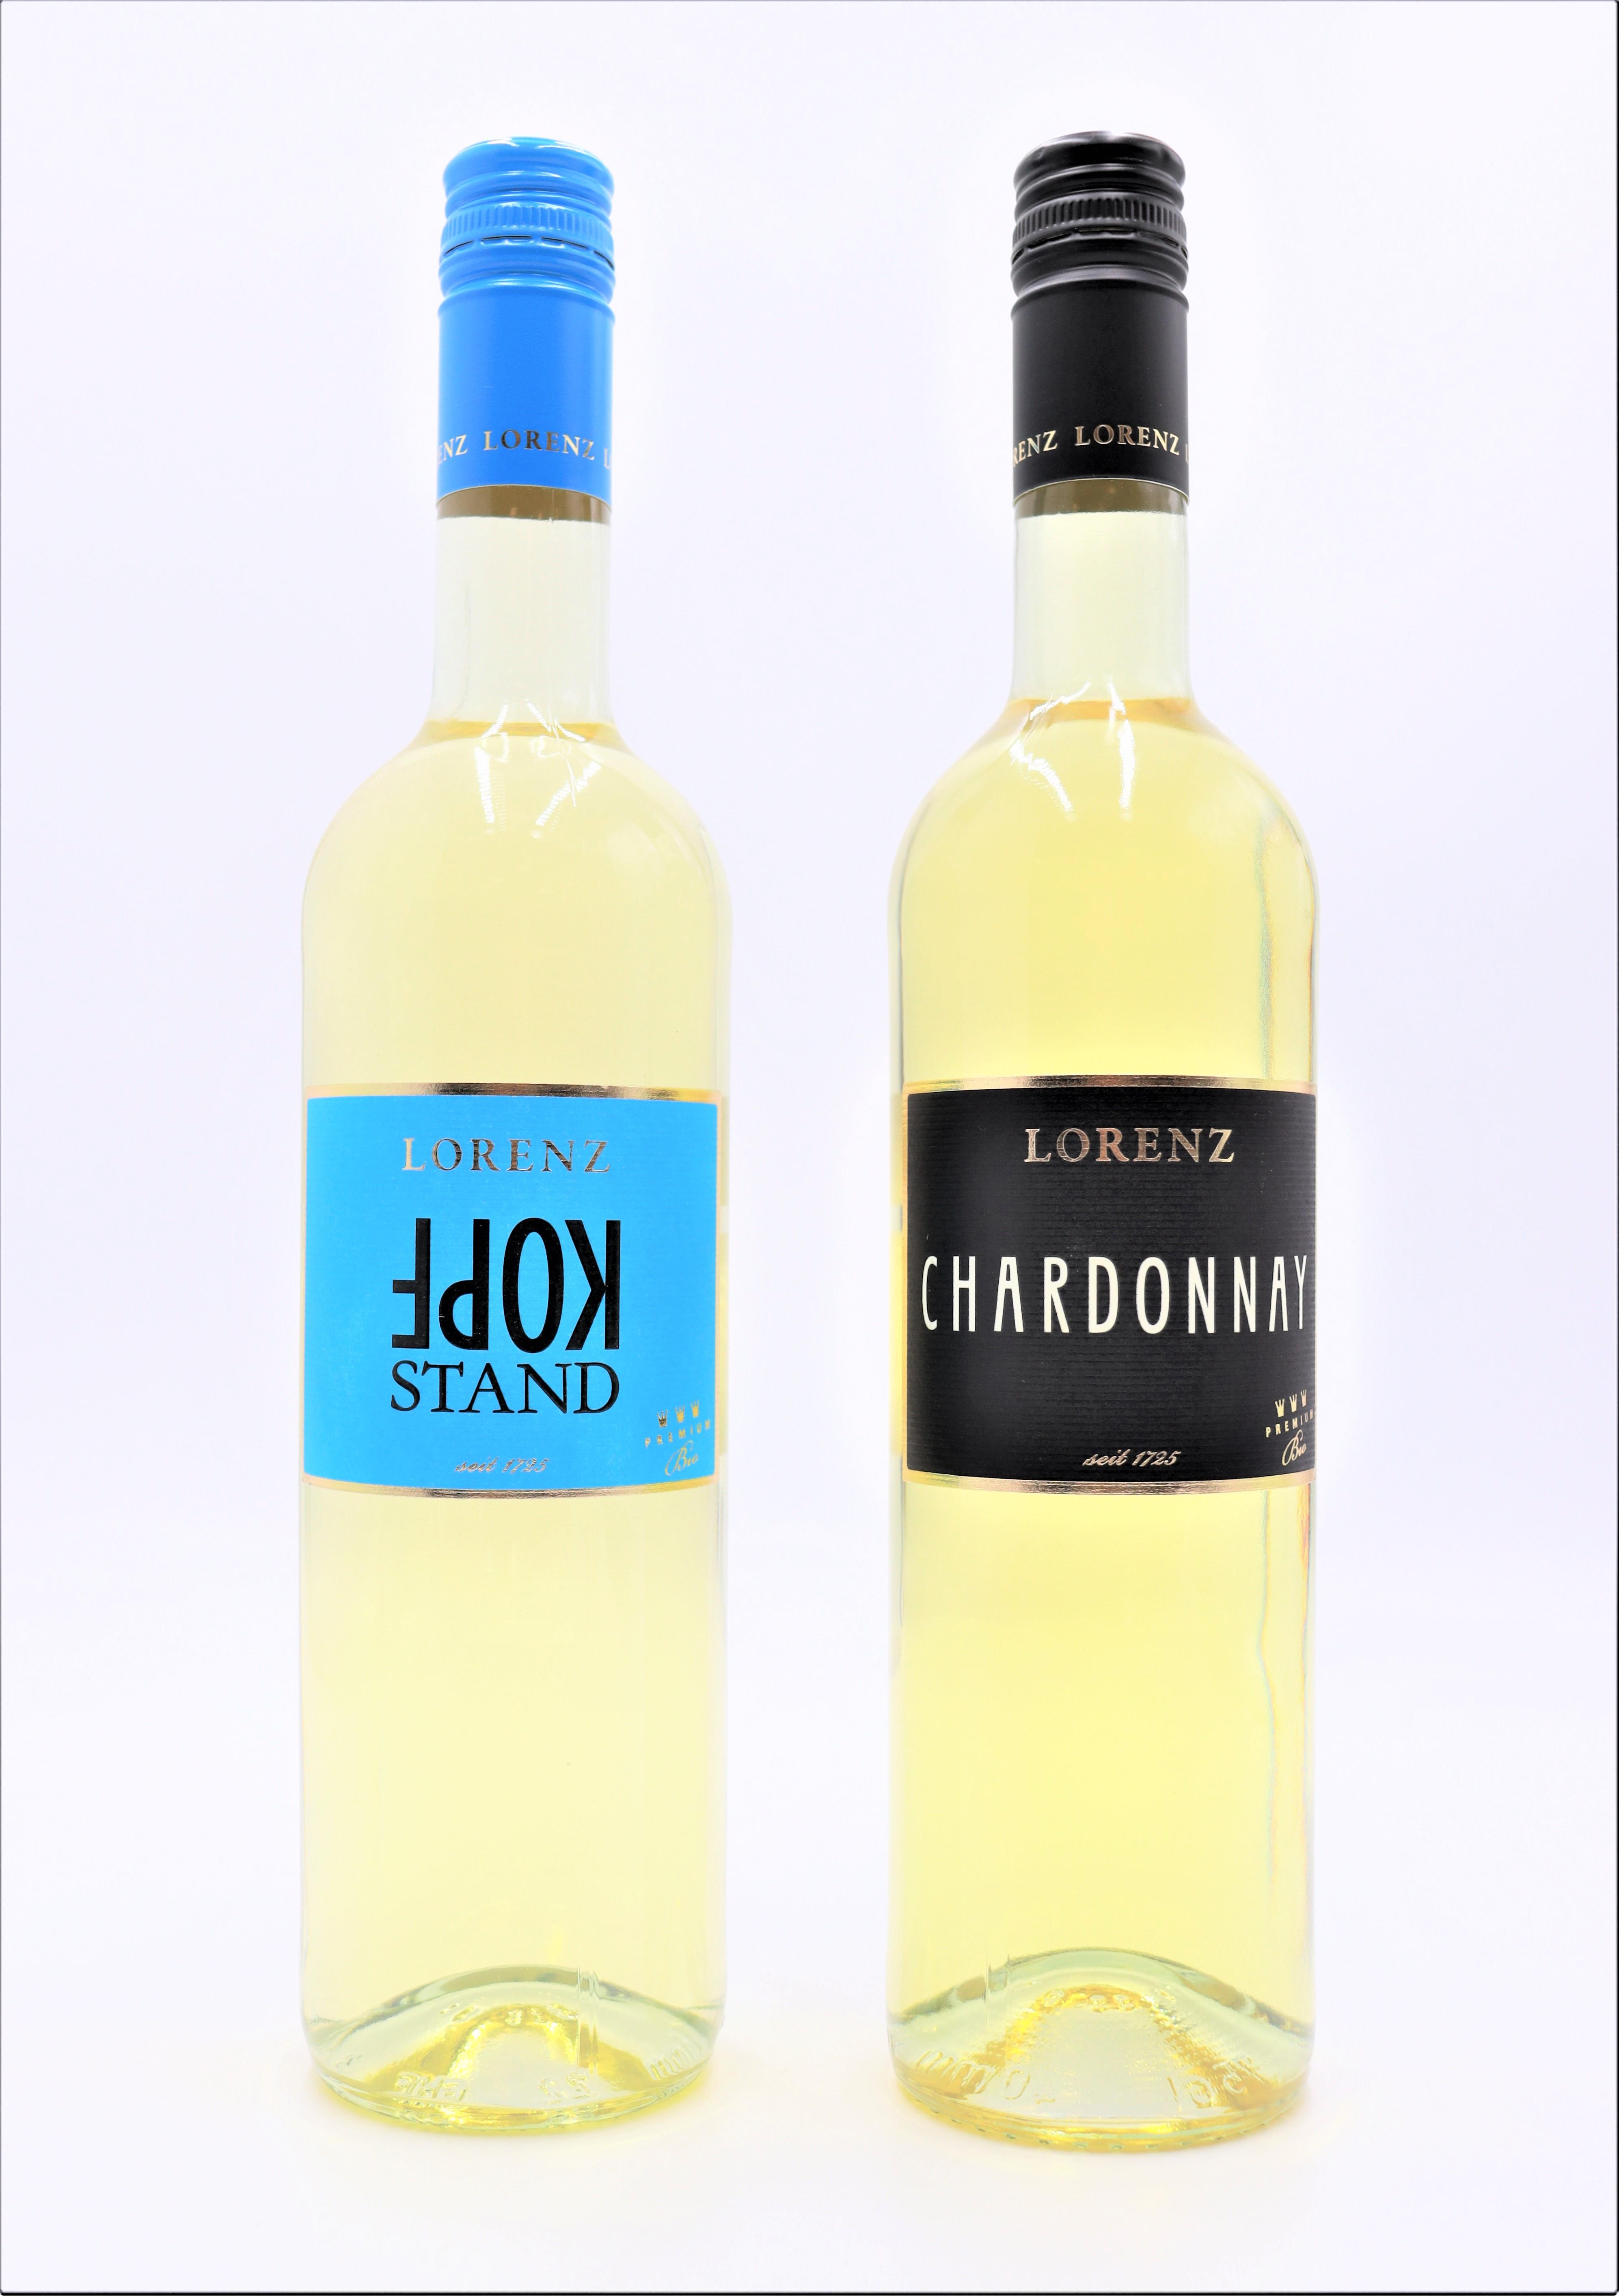 Lorenz Chardonnay